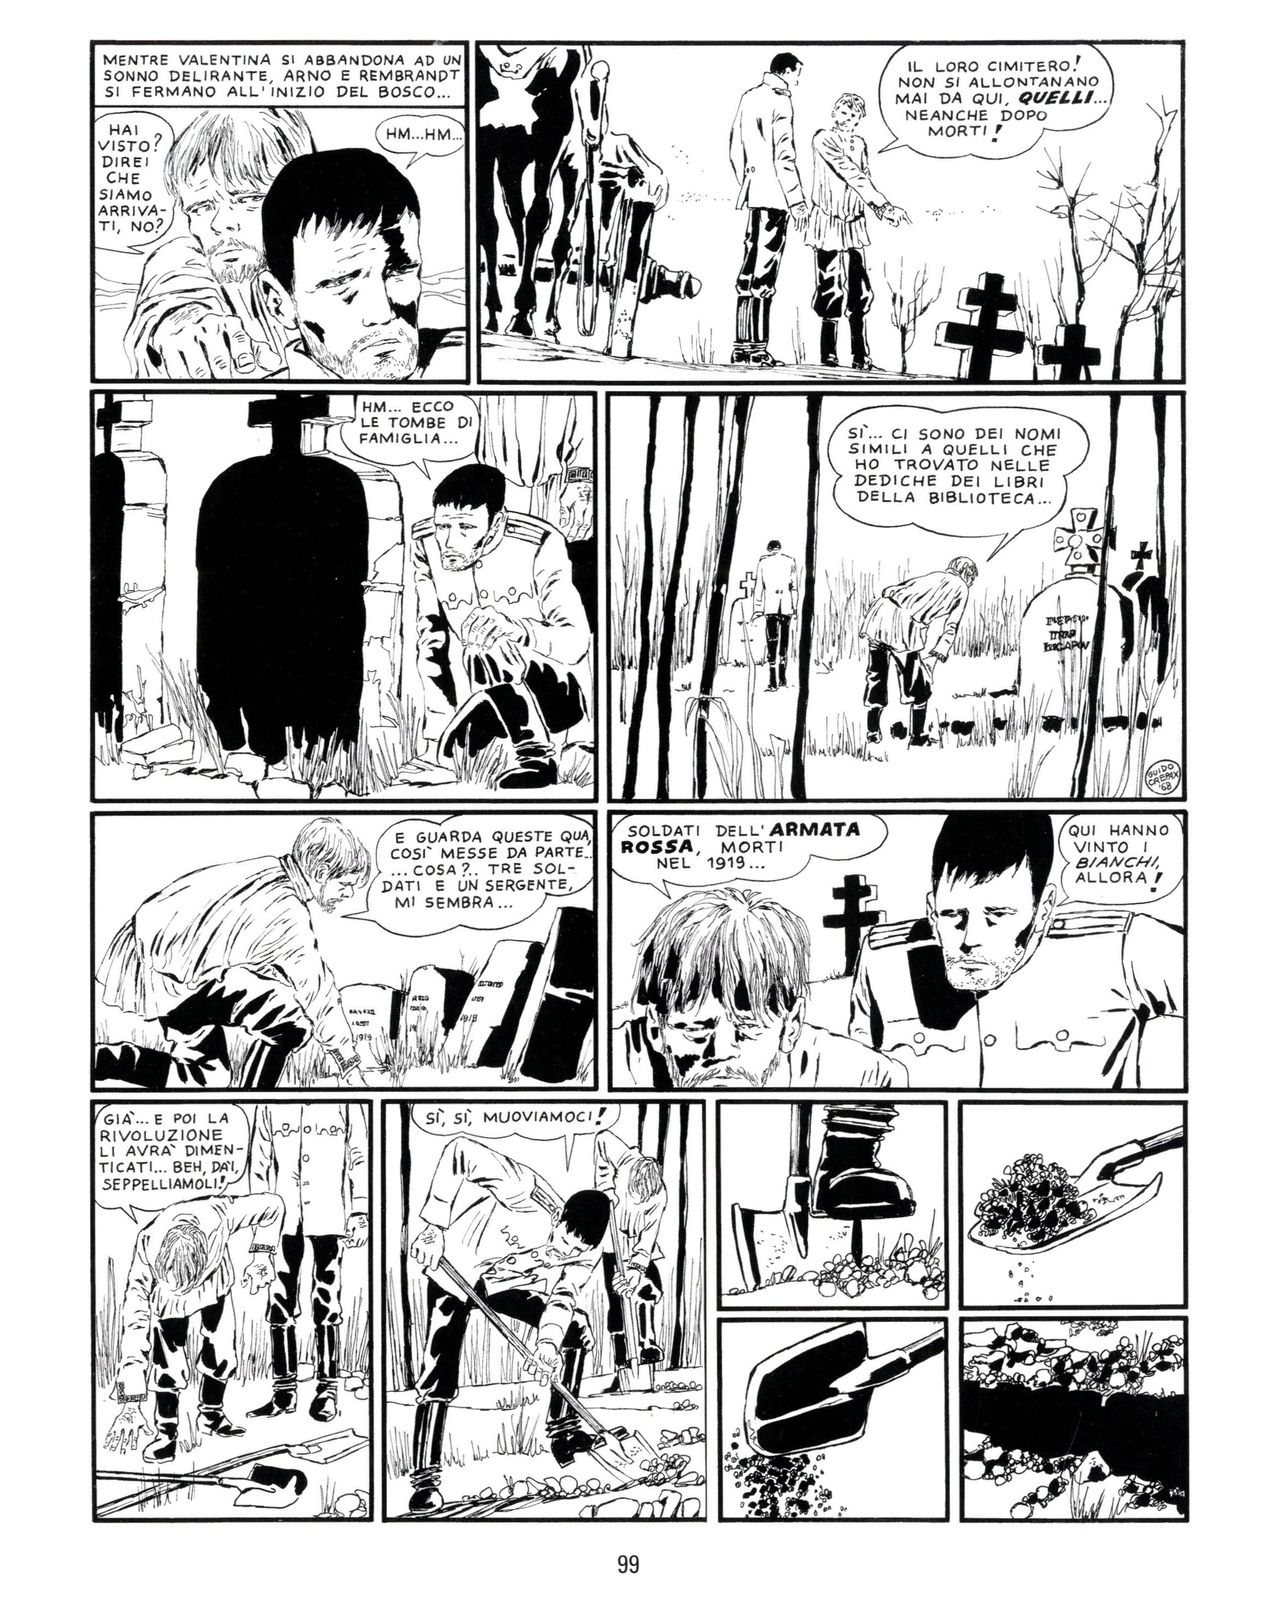 [Guido Crepax] Erotica Fumetti #25 : L'ascesa dei sotterranei : I cavalieri ciechi [Italian] 100